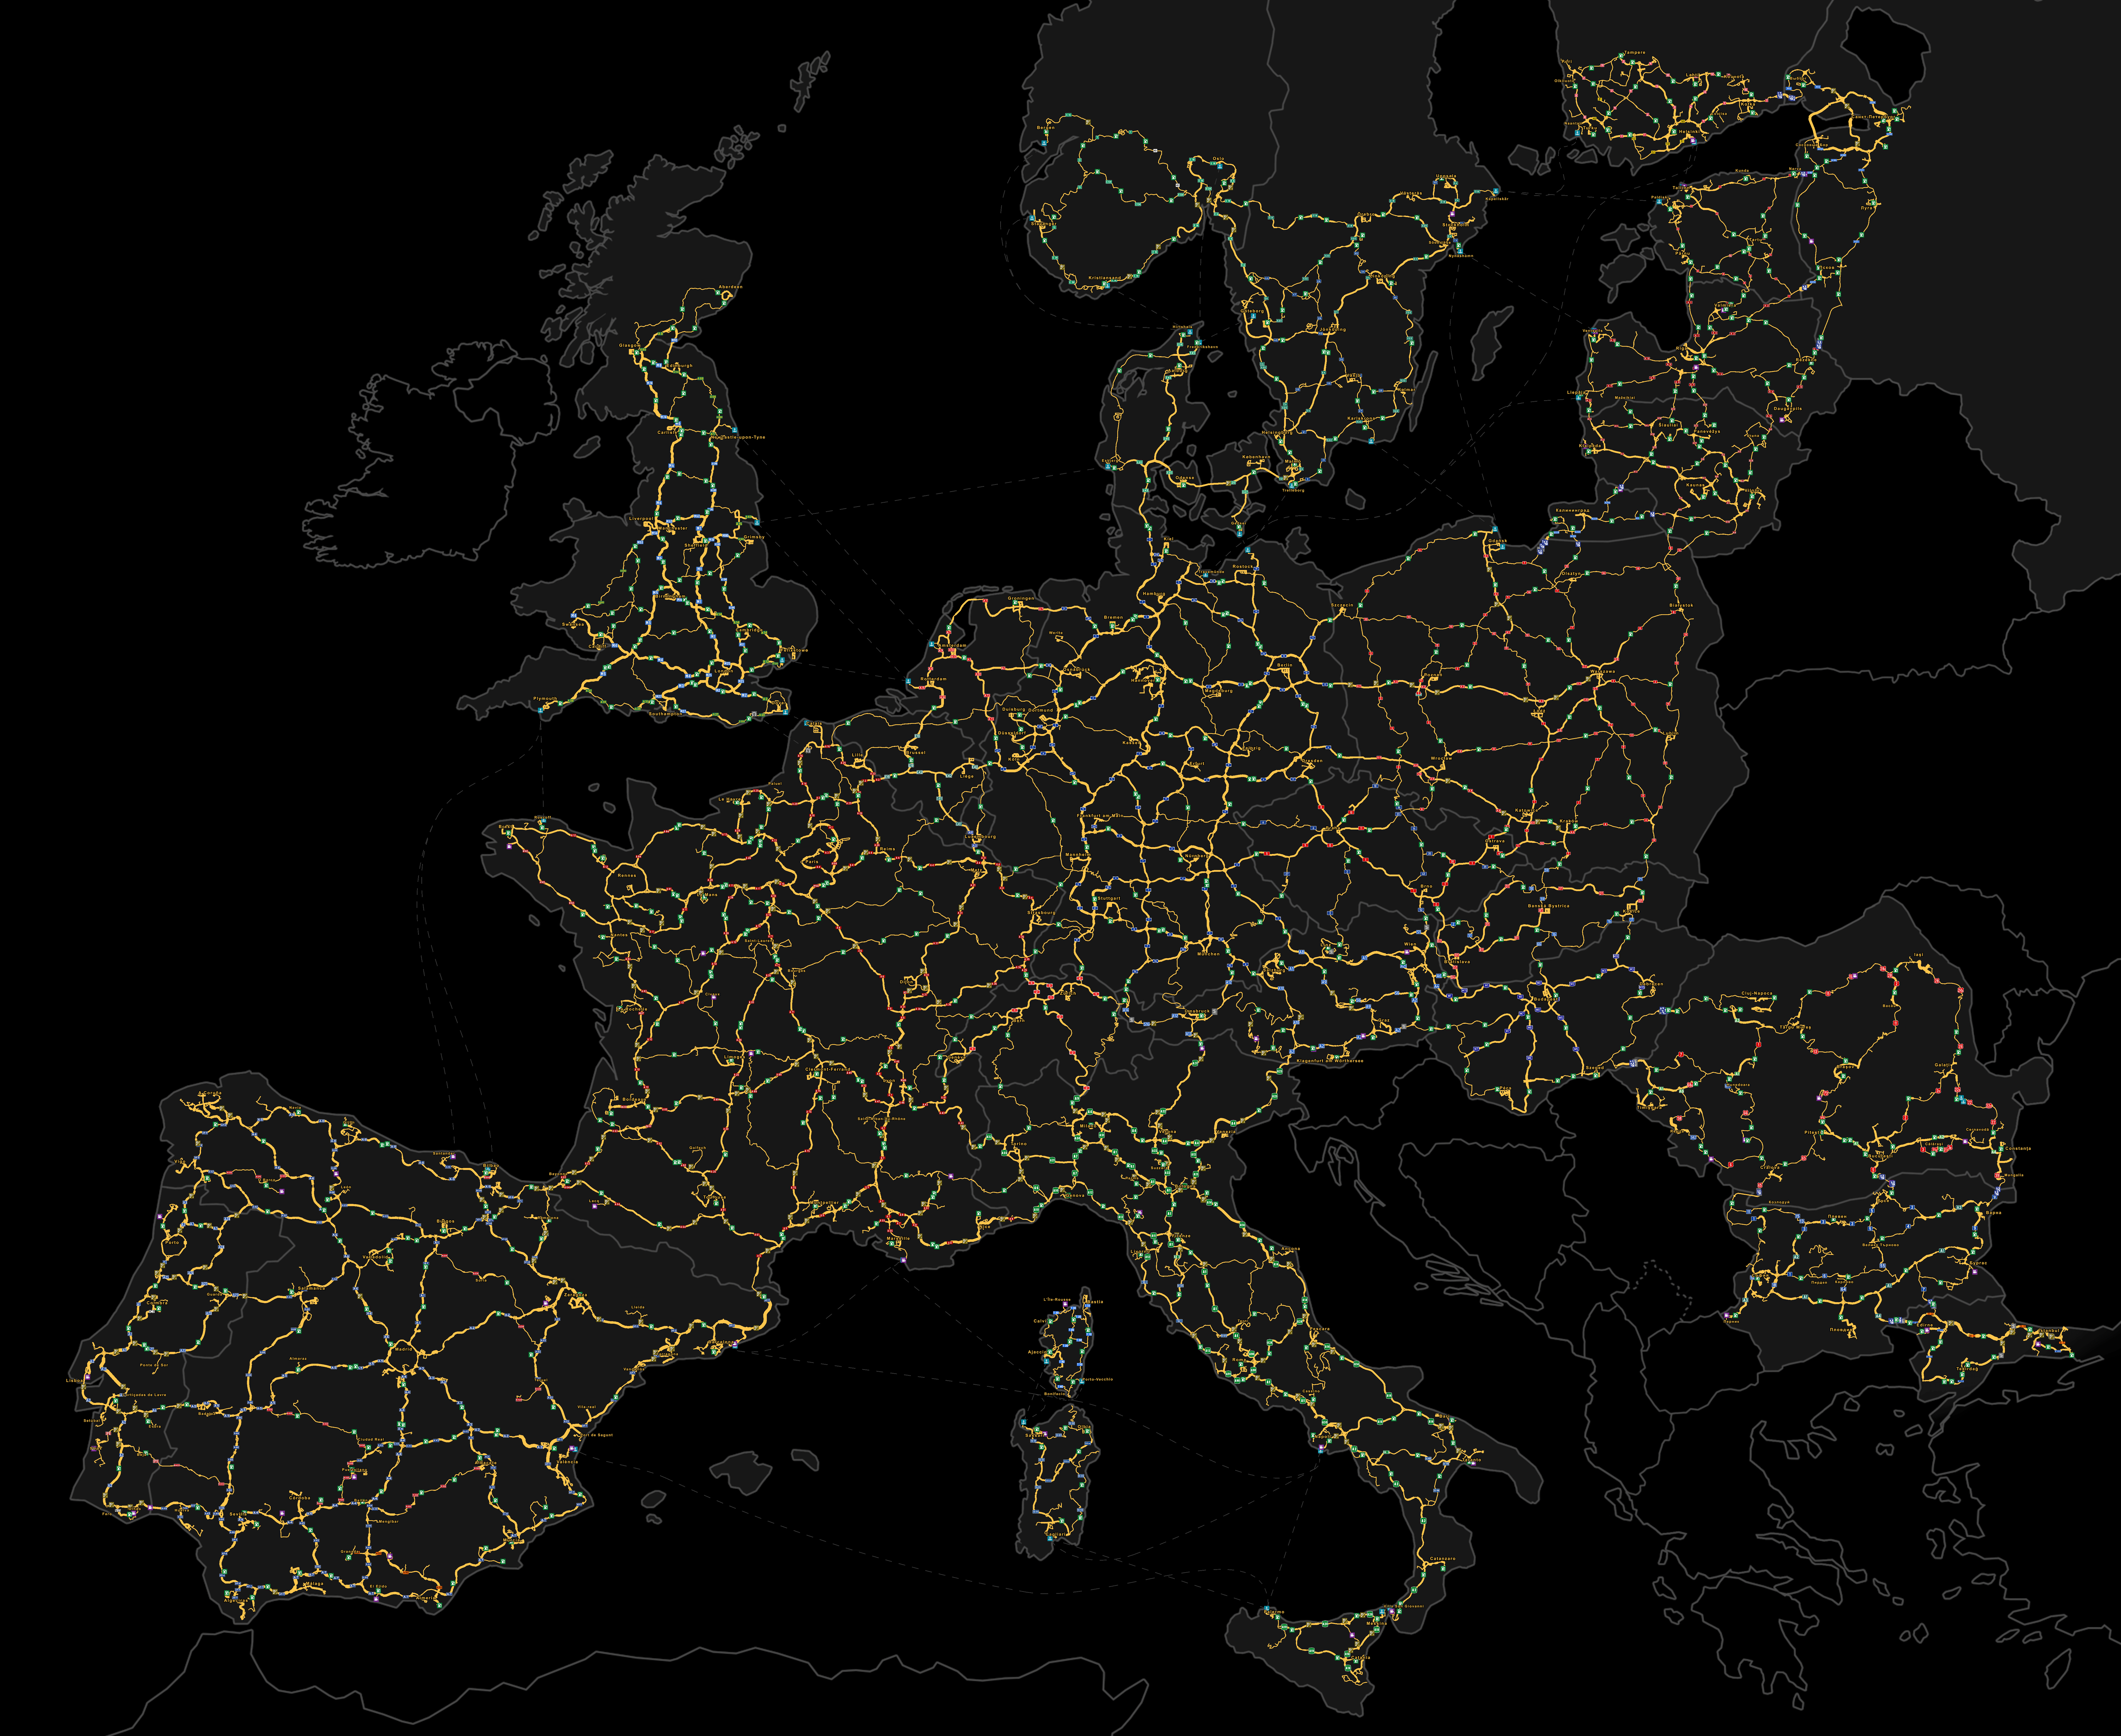 17 Euro Truck Simulator 2 Full Map